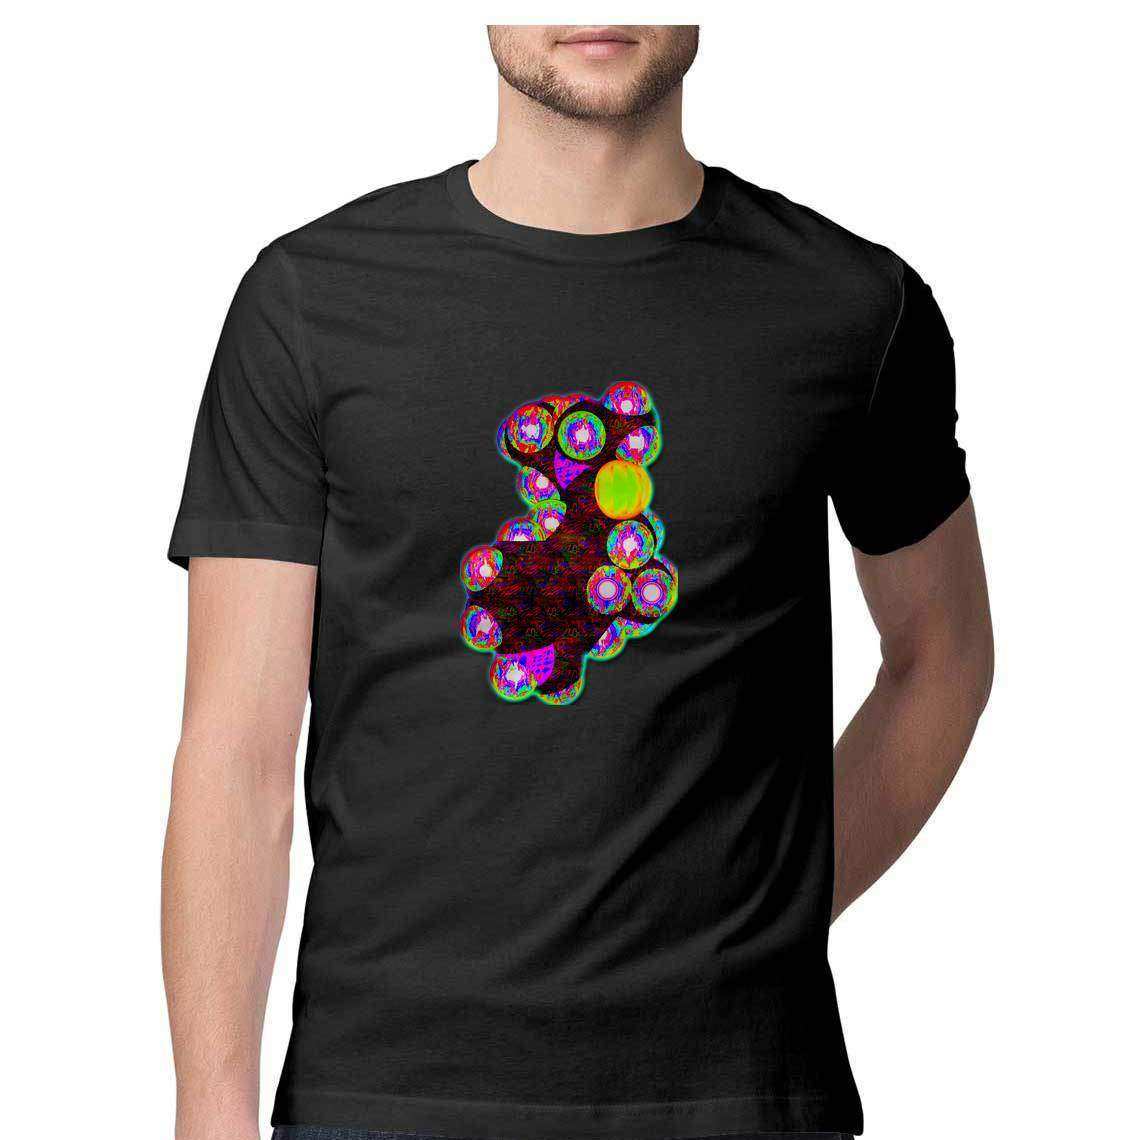 The LSD Molecule Graphic Men's T-Shirt - CBD Store India